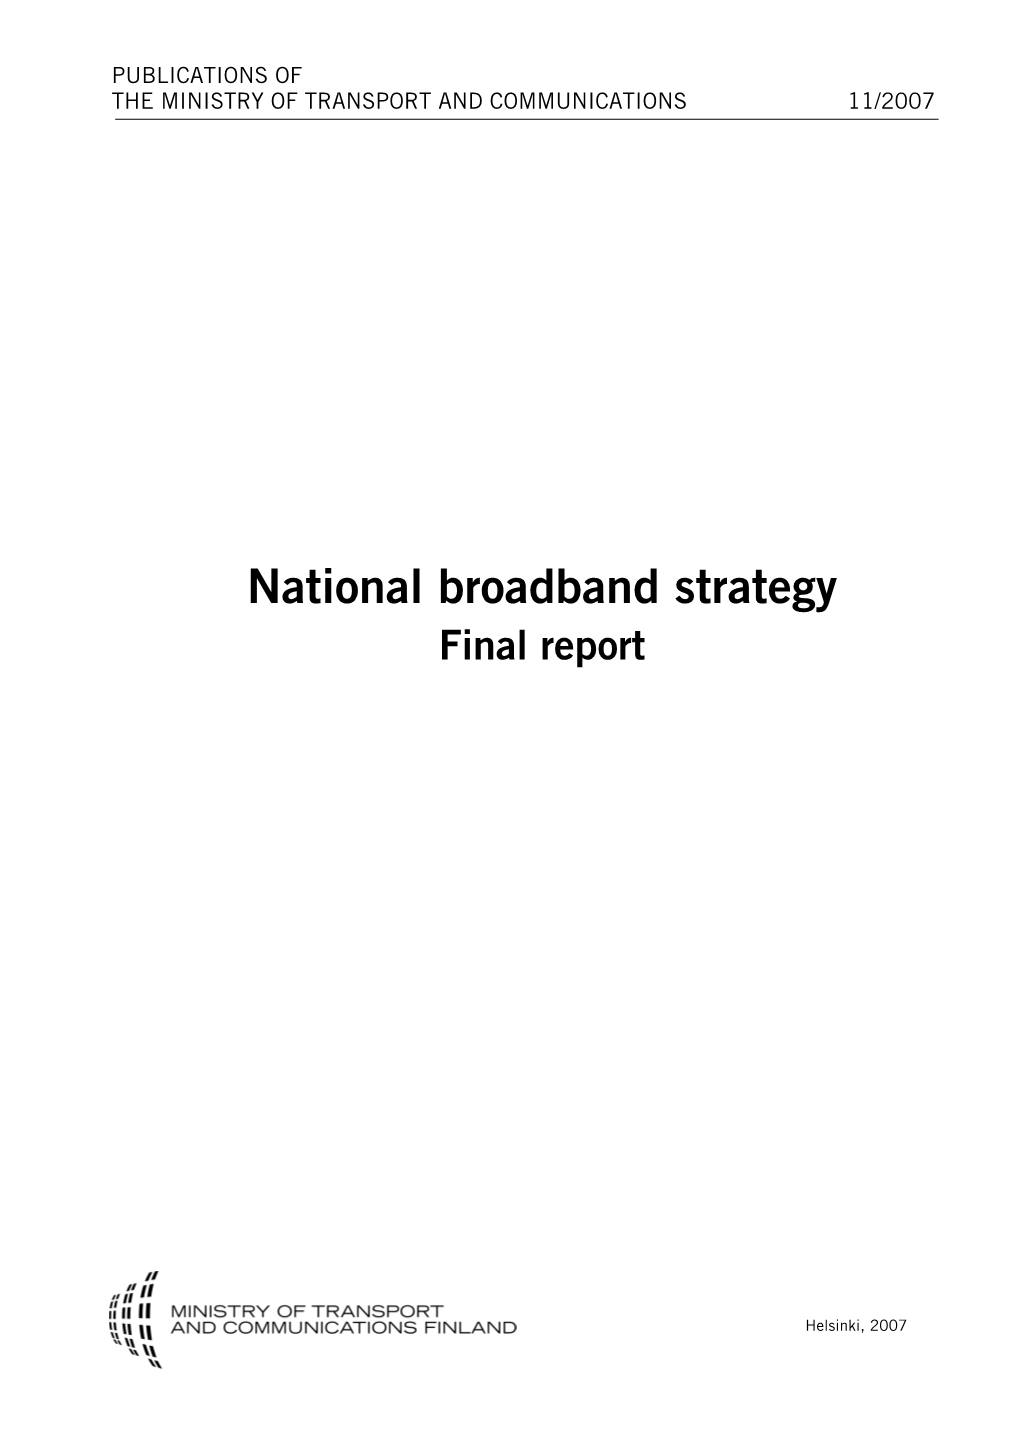 National Broadband Strategy Final Report